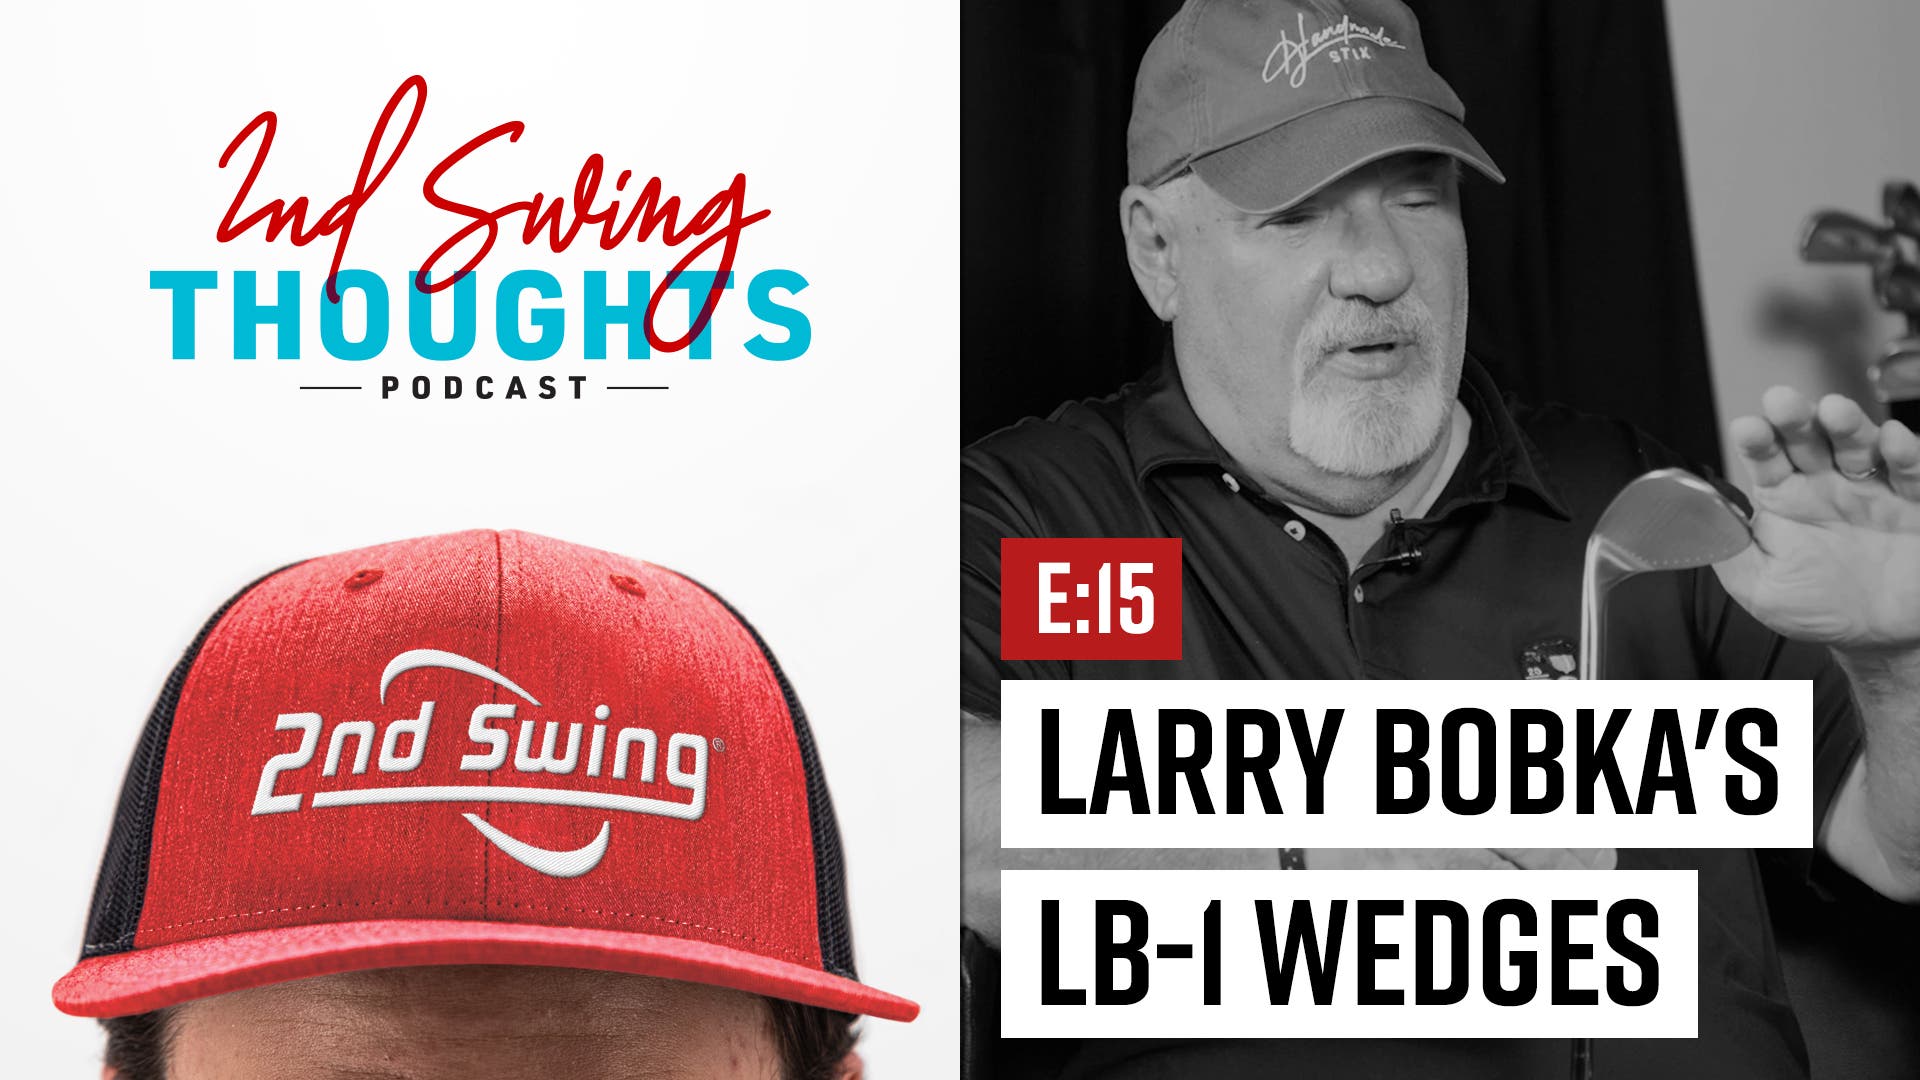 2nd Swing Thoughts: Episode 15 | Larry Bobka's LB-1 Wedges